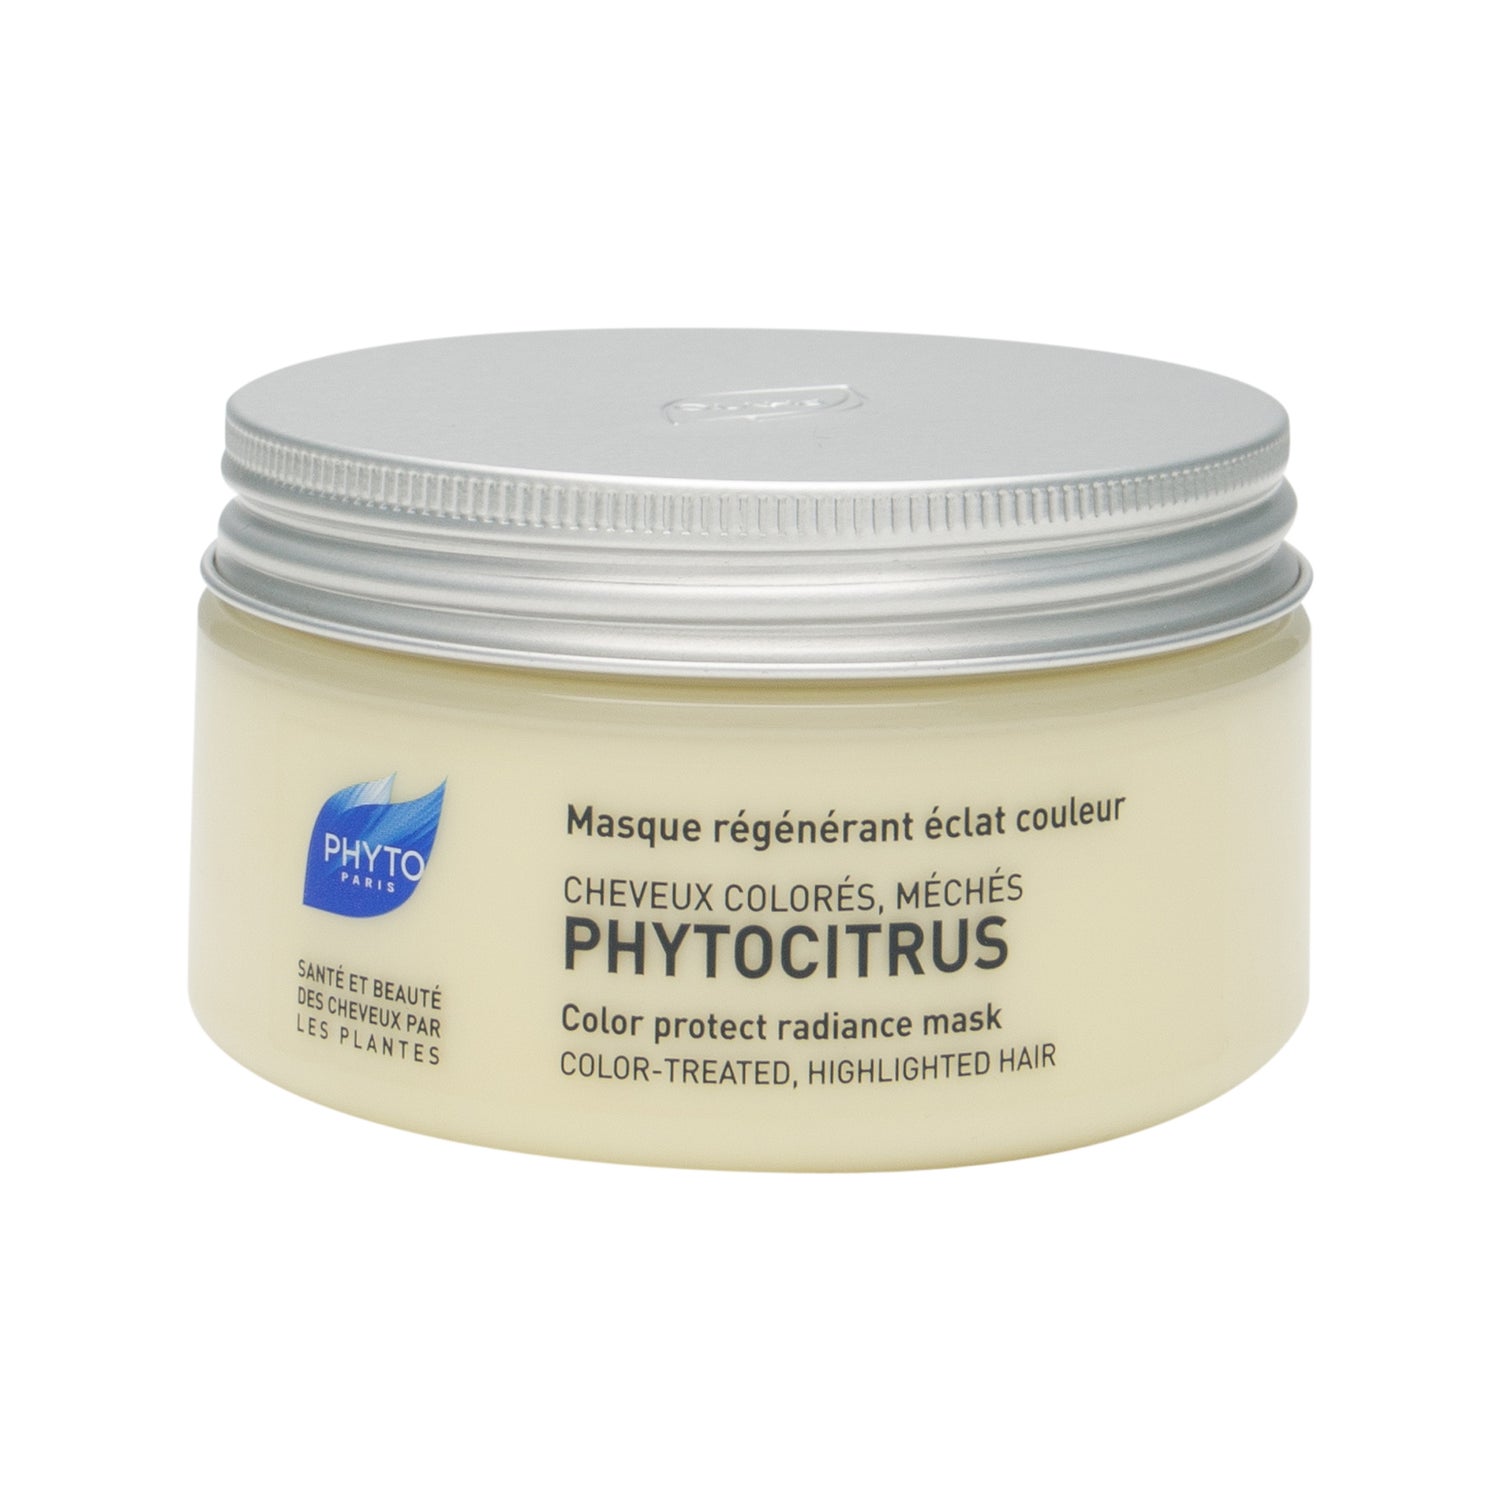 Phytocitrus regenerating mask luminosity colour | PromoFarma